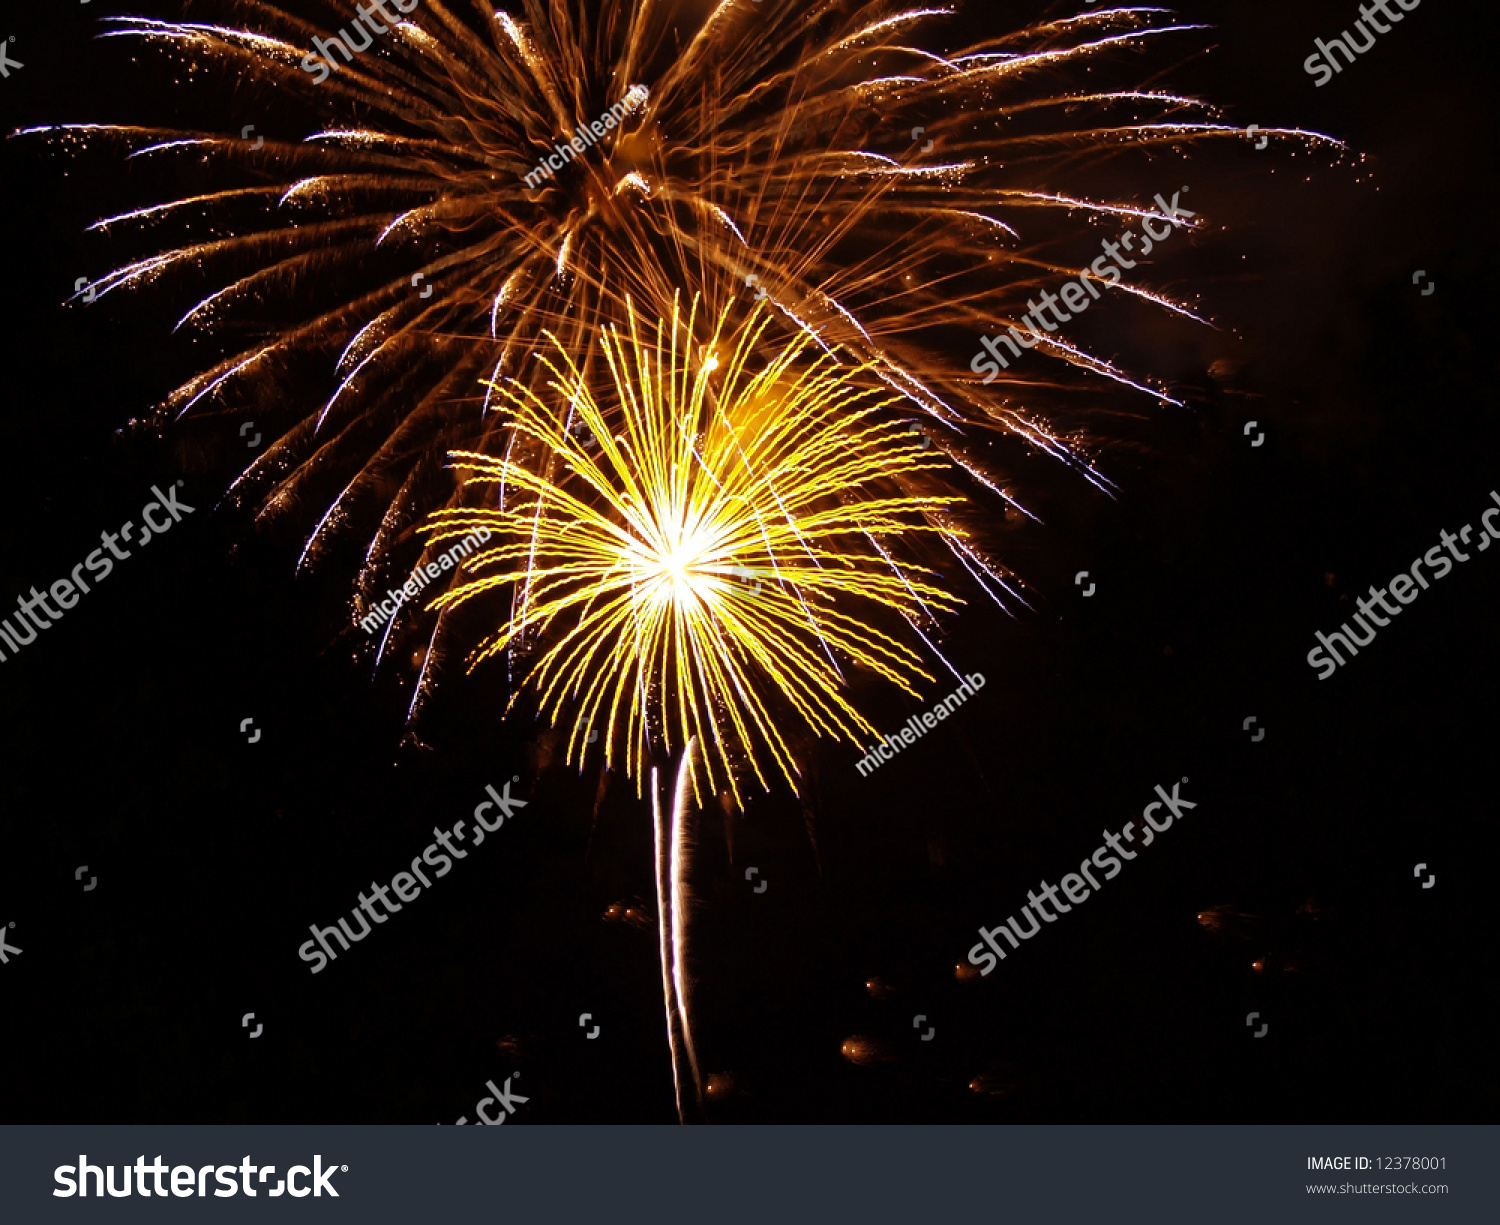 fireworks display #12378001